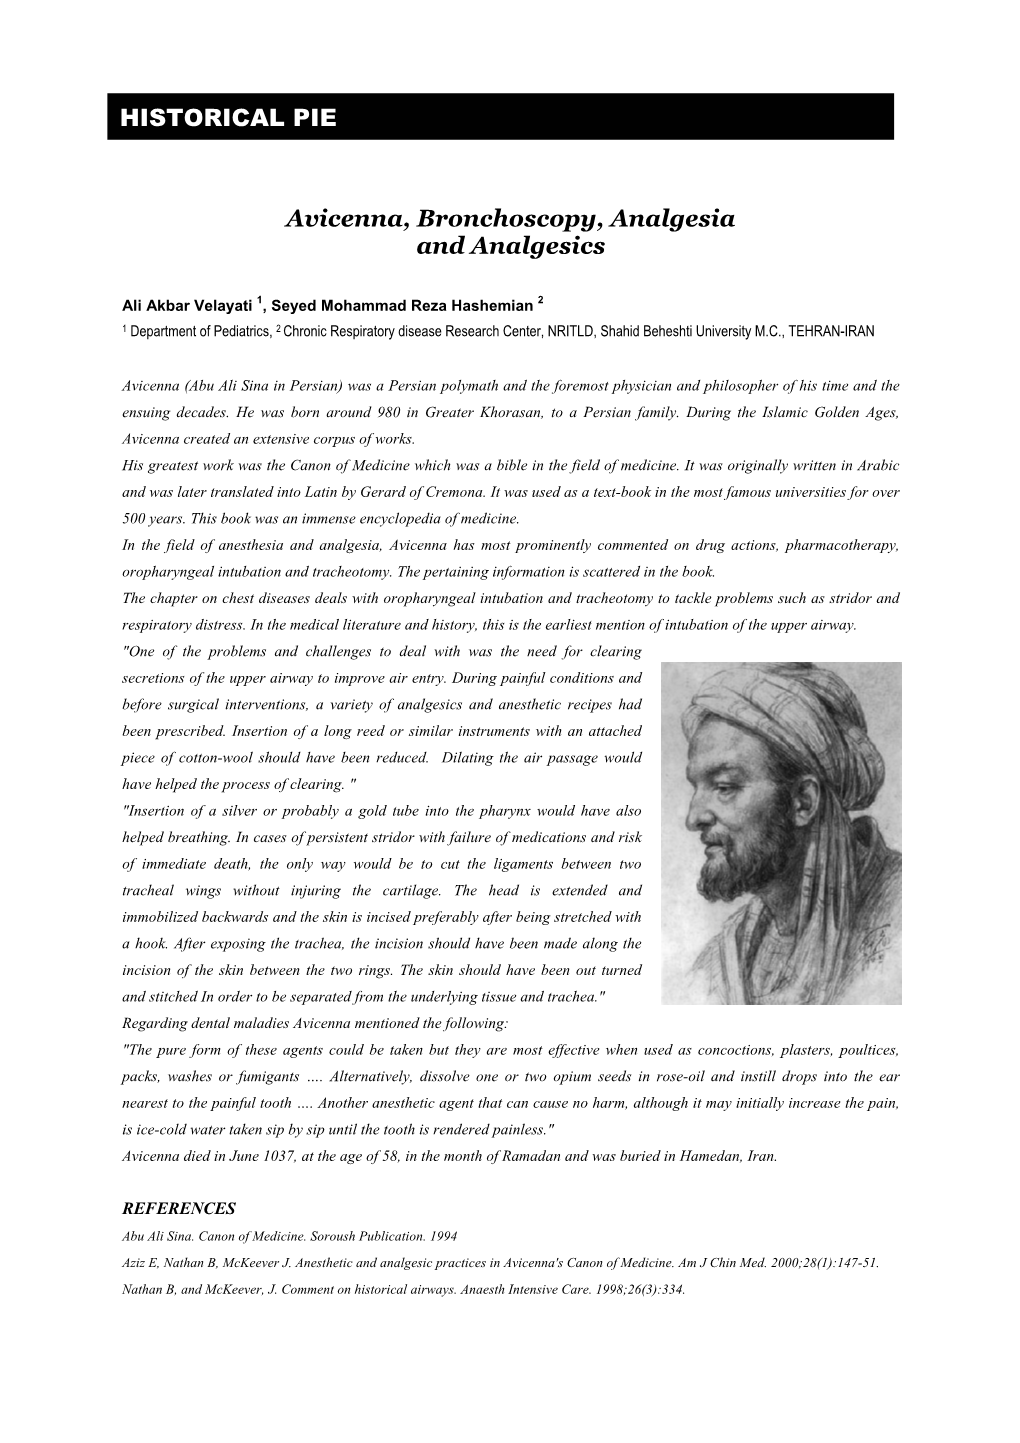 Avicenna, Bronchoscopy, Analgesia and Analgesics HISTORICAL